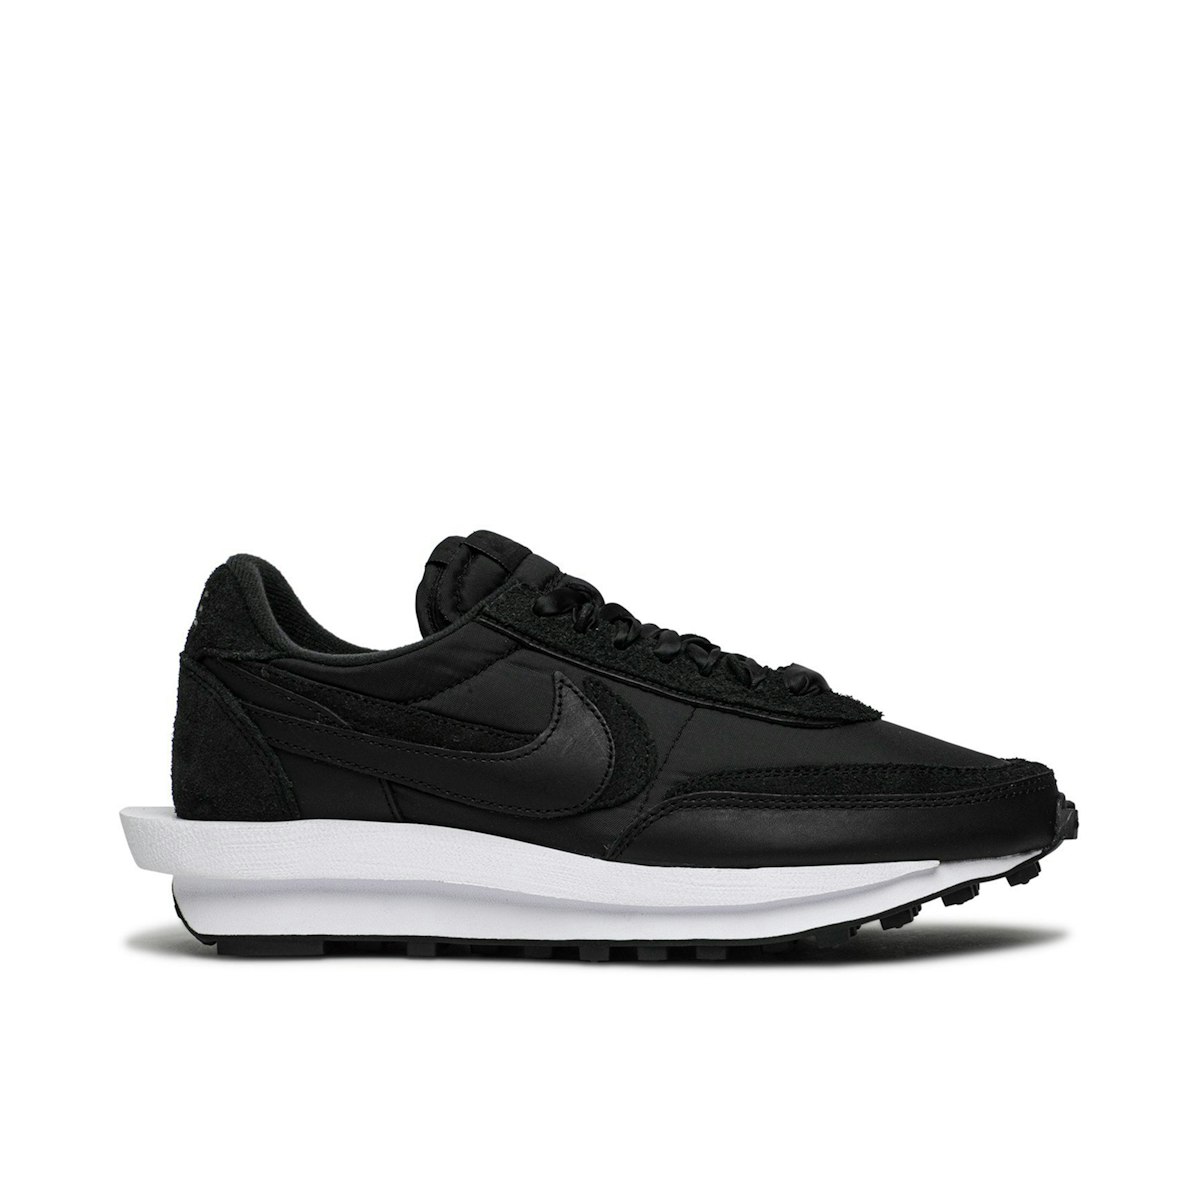 Boer knijpen Ultieme Nike LDWaffle x Sacai Black White | BV0073-002 | Laced